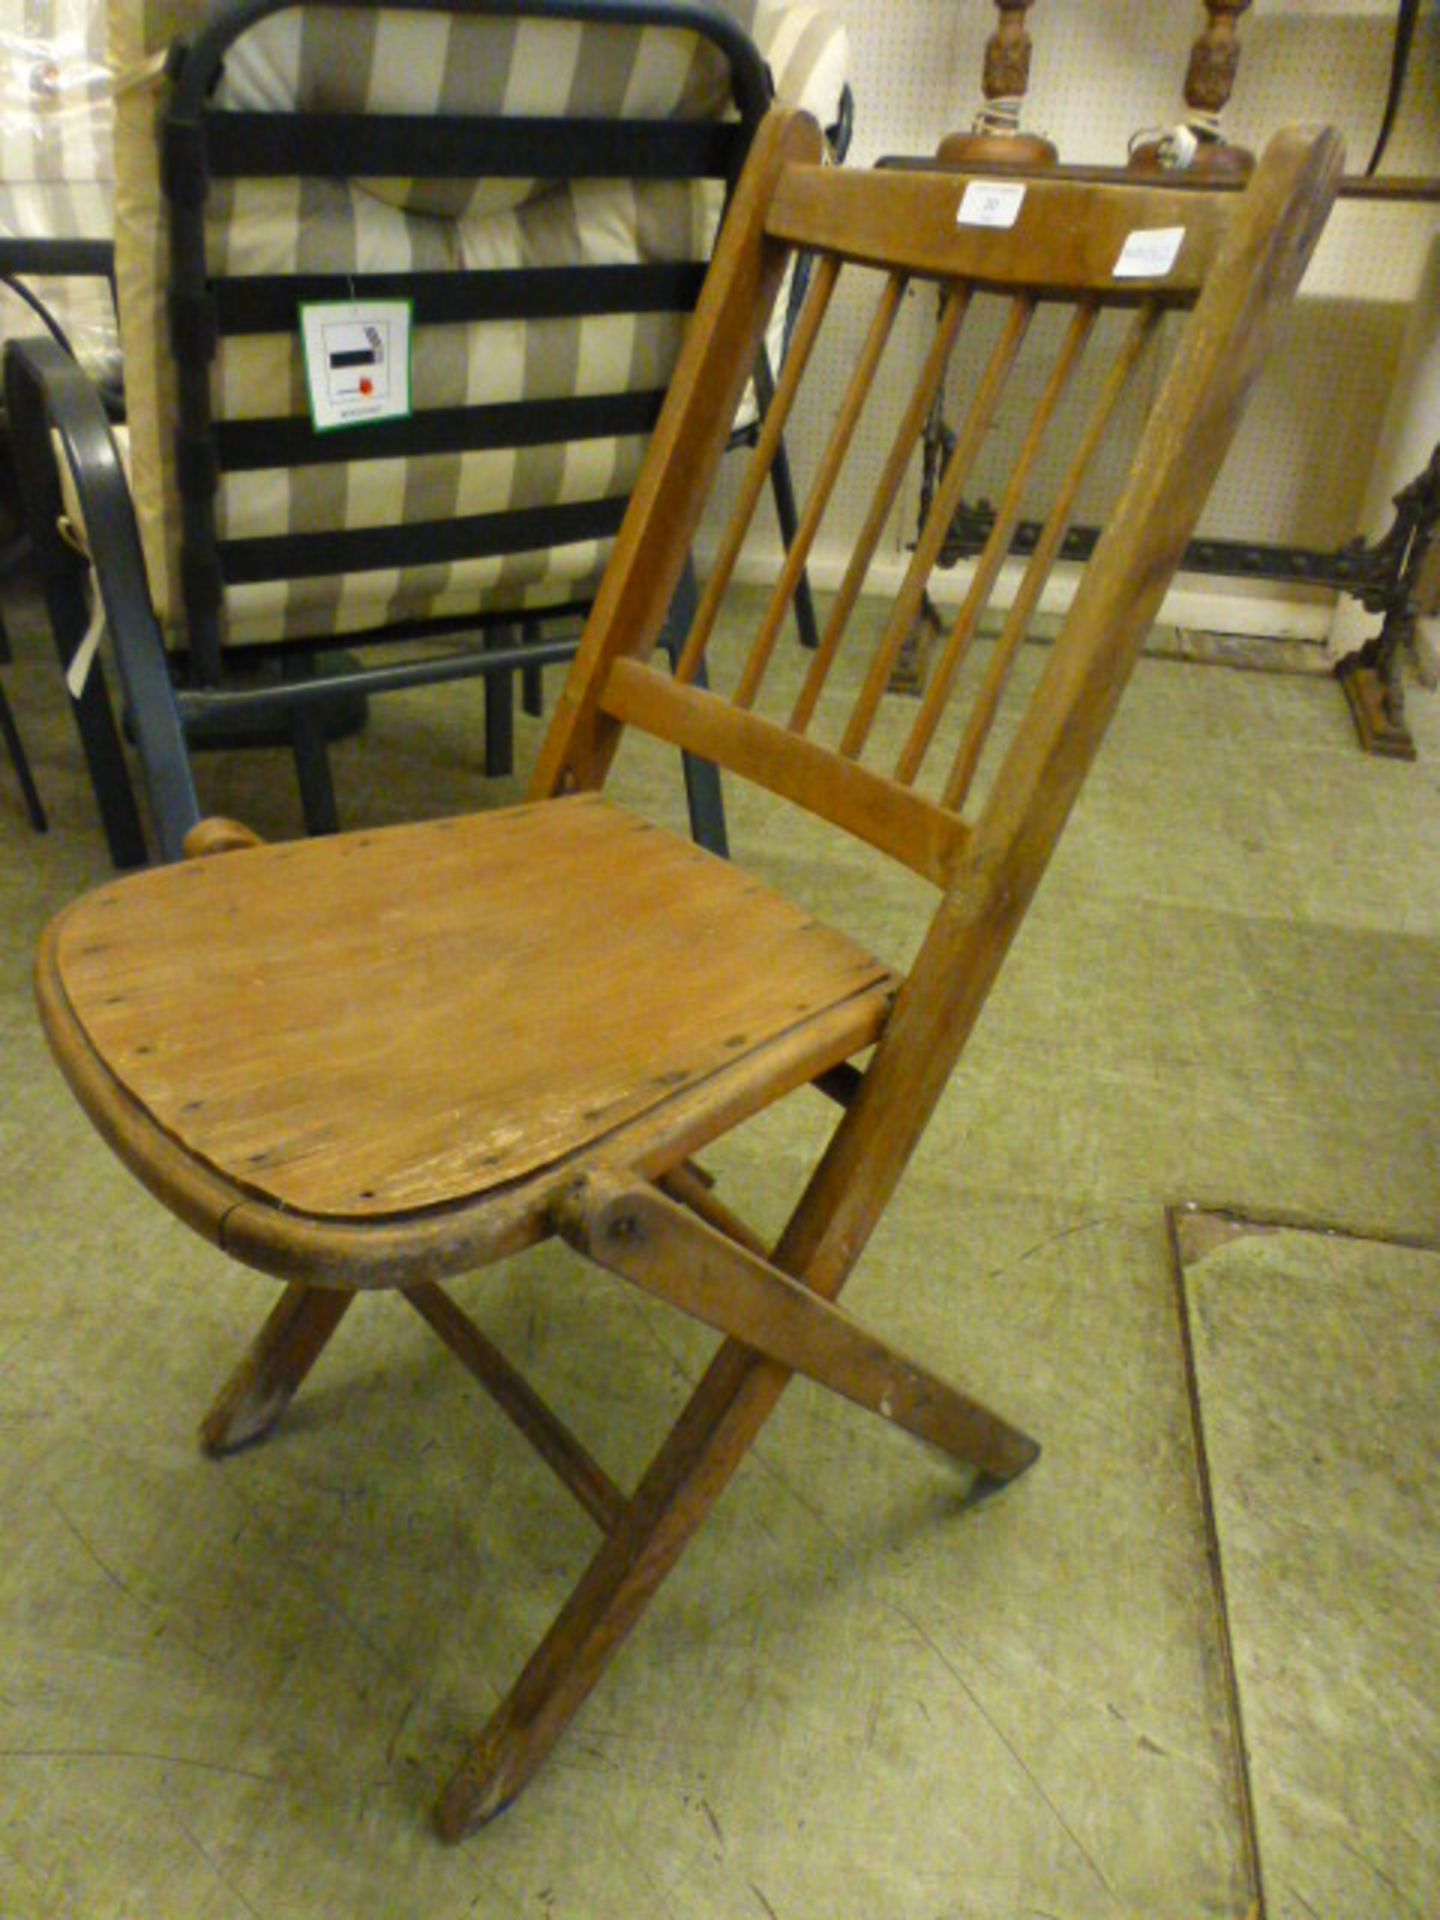 An early 20th century beech folding chair